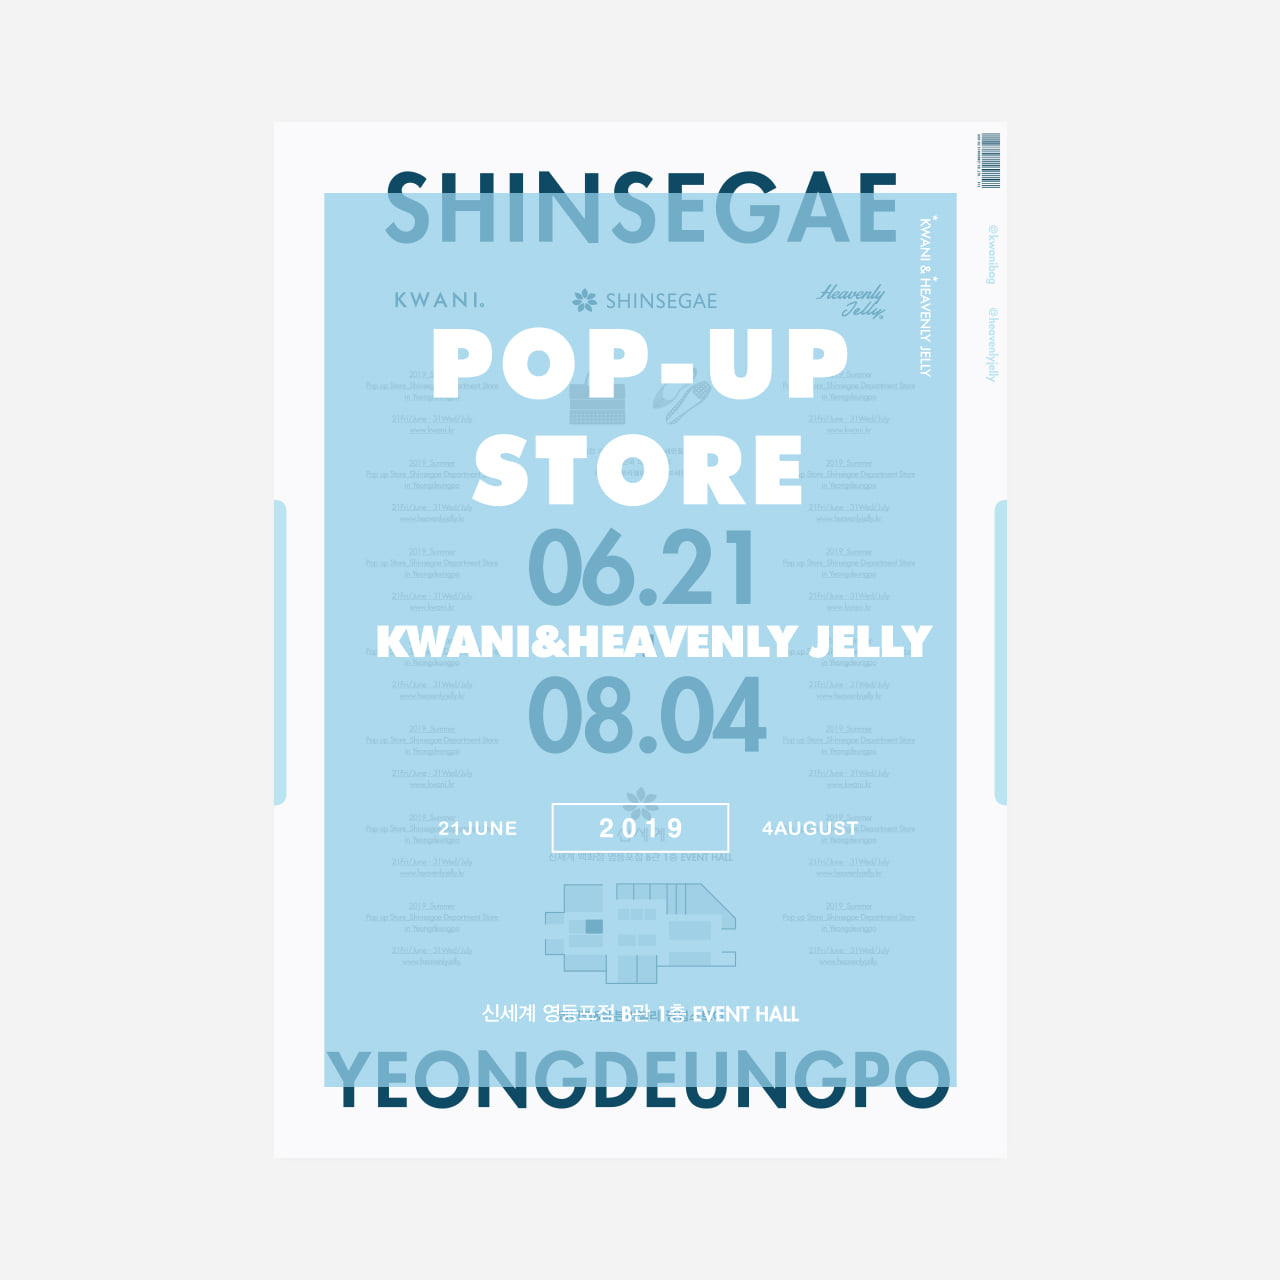 SHINSEGAE Pop-up Store!